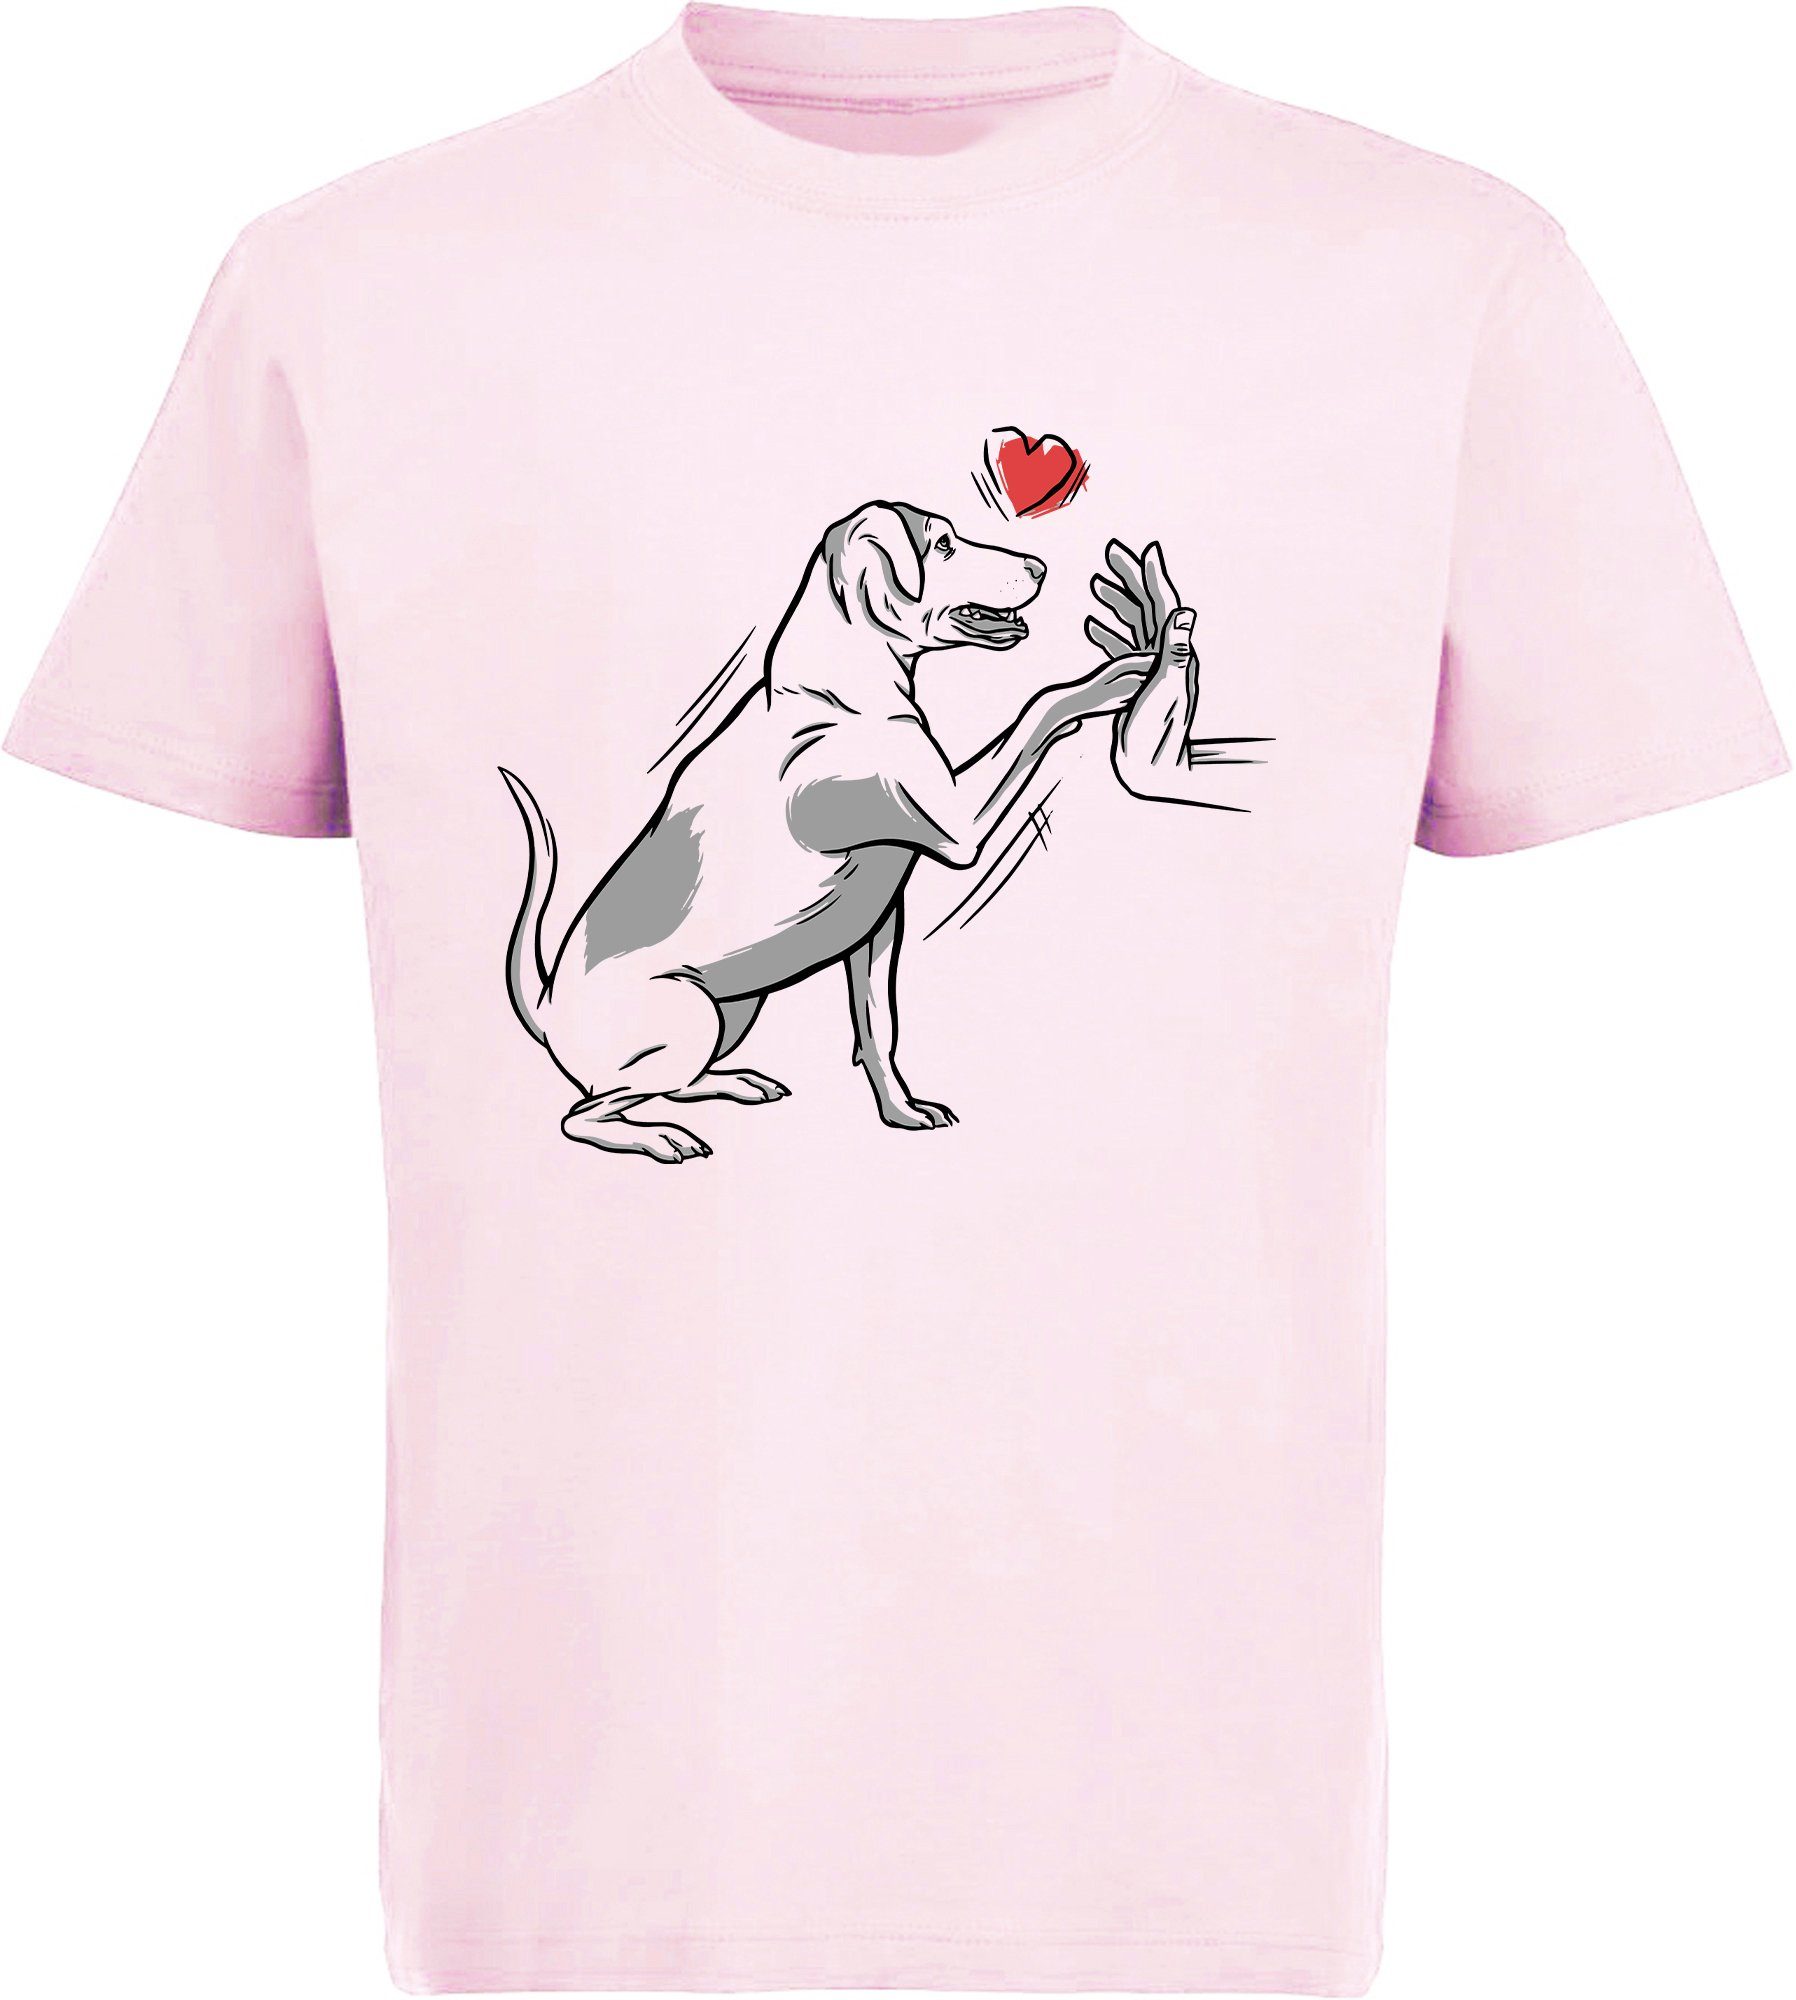 MyDesign24 Print-Shirt Kinder Hunde rosa Aufdruck, Labrador bedruckt - Pfötchen i234 gibt T-Shirt mit Baumwollshirt